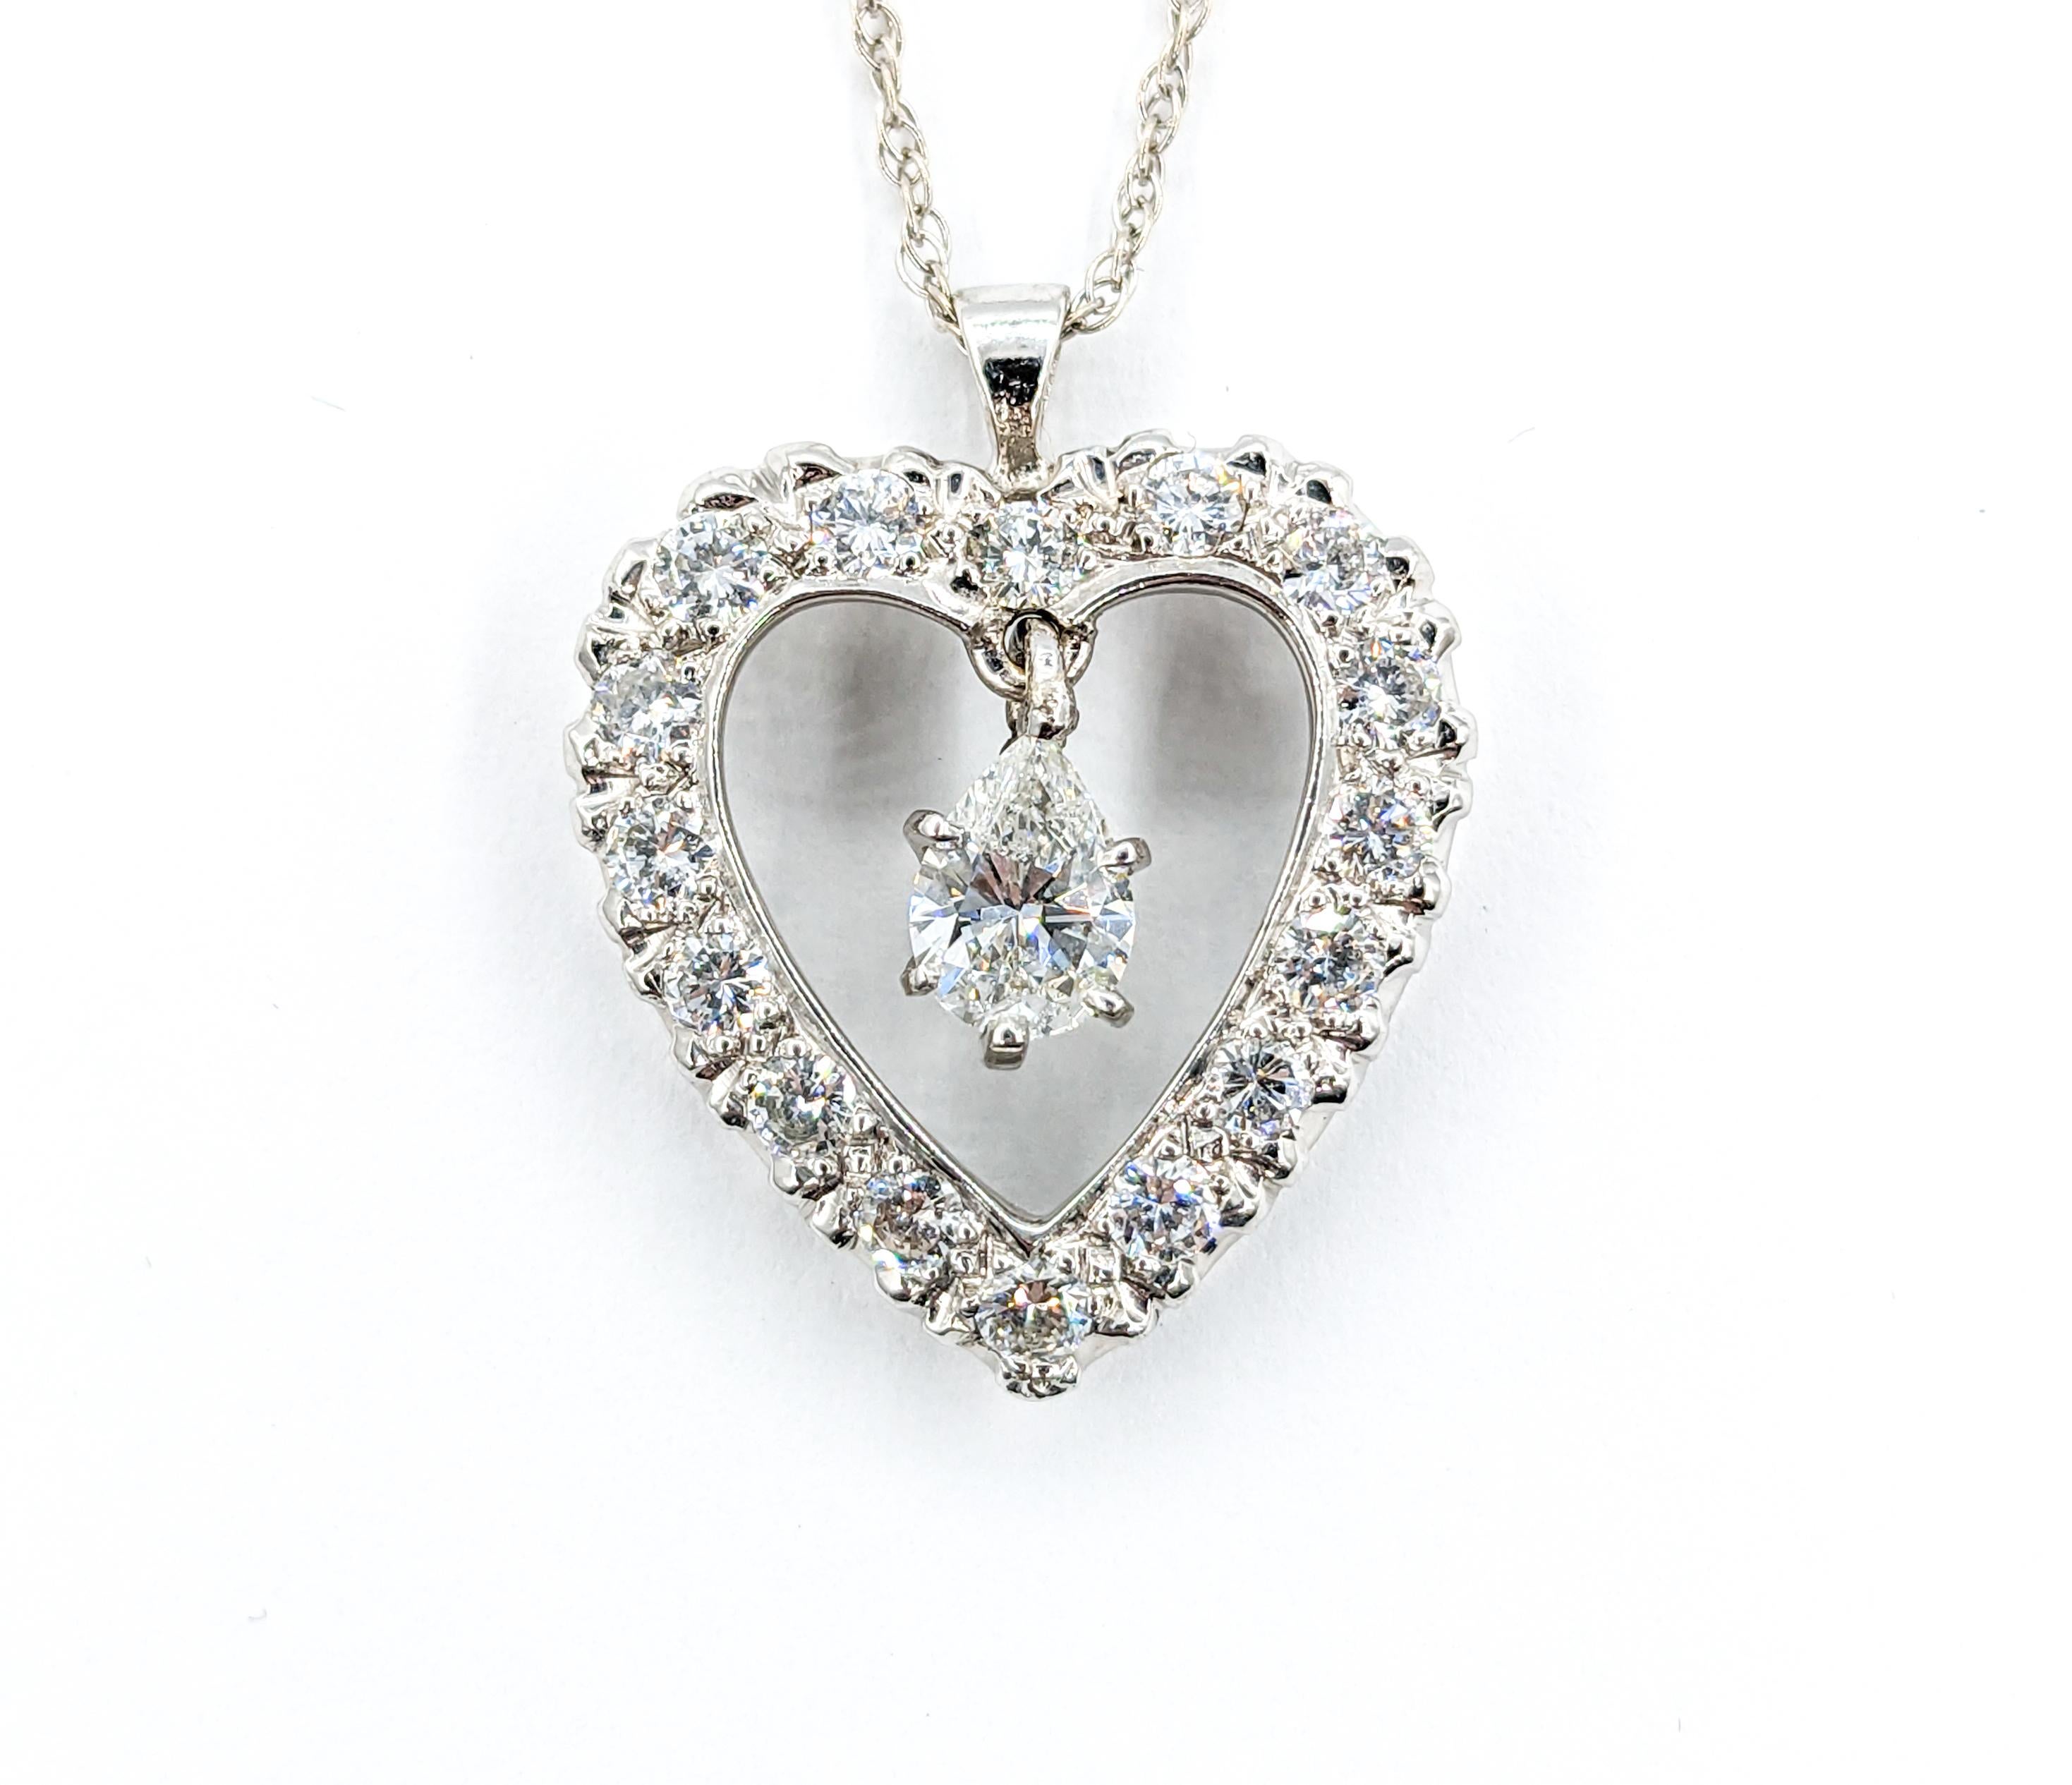  Feminine 1.30ctw Diamond Heart Pendant Necklace in White Gold For Sale 6